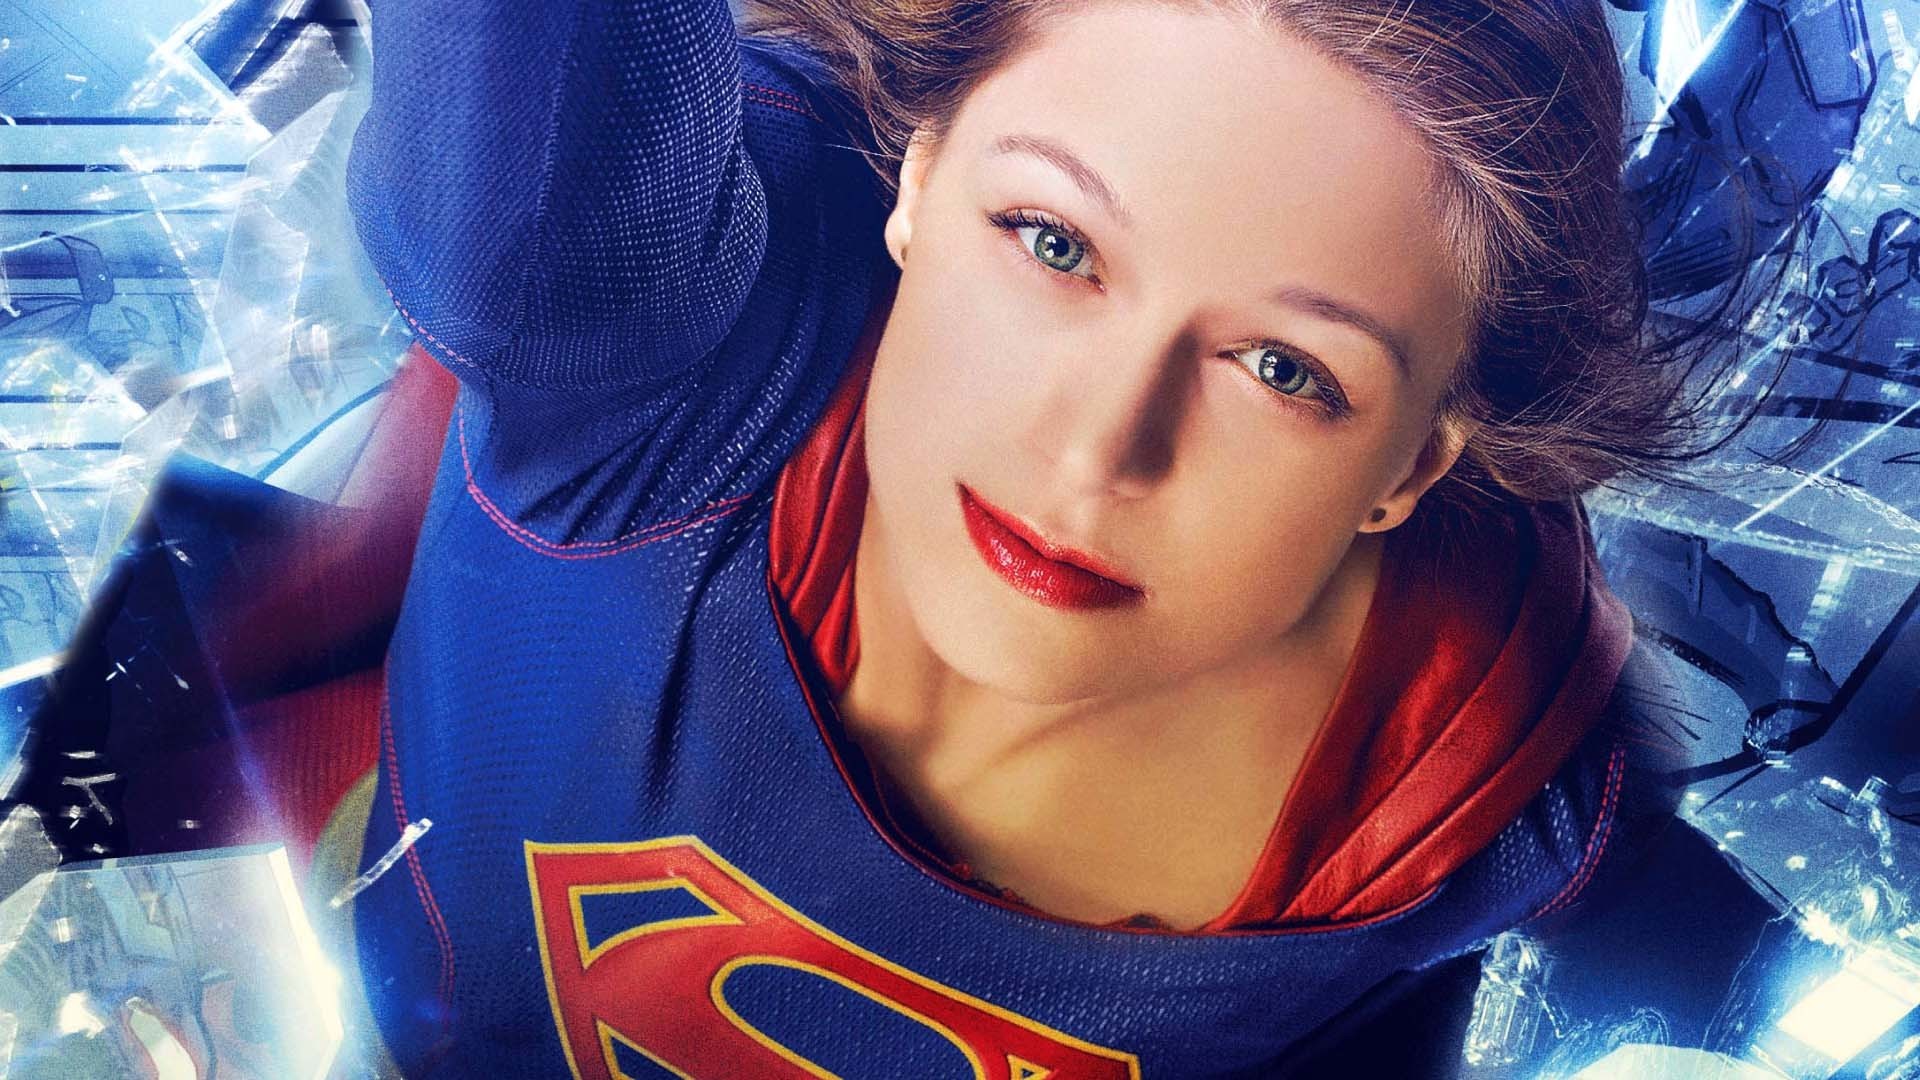 TV Show Supergirl HD Wallpaper | Background Image